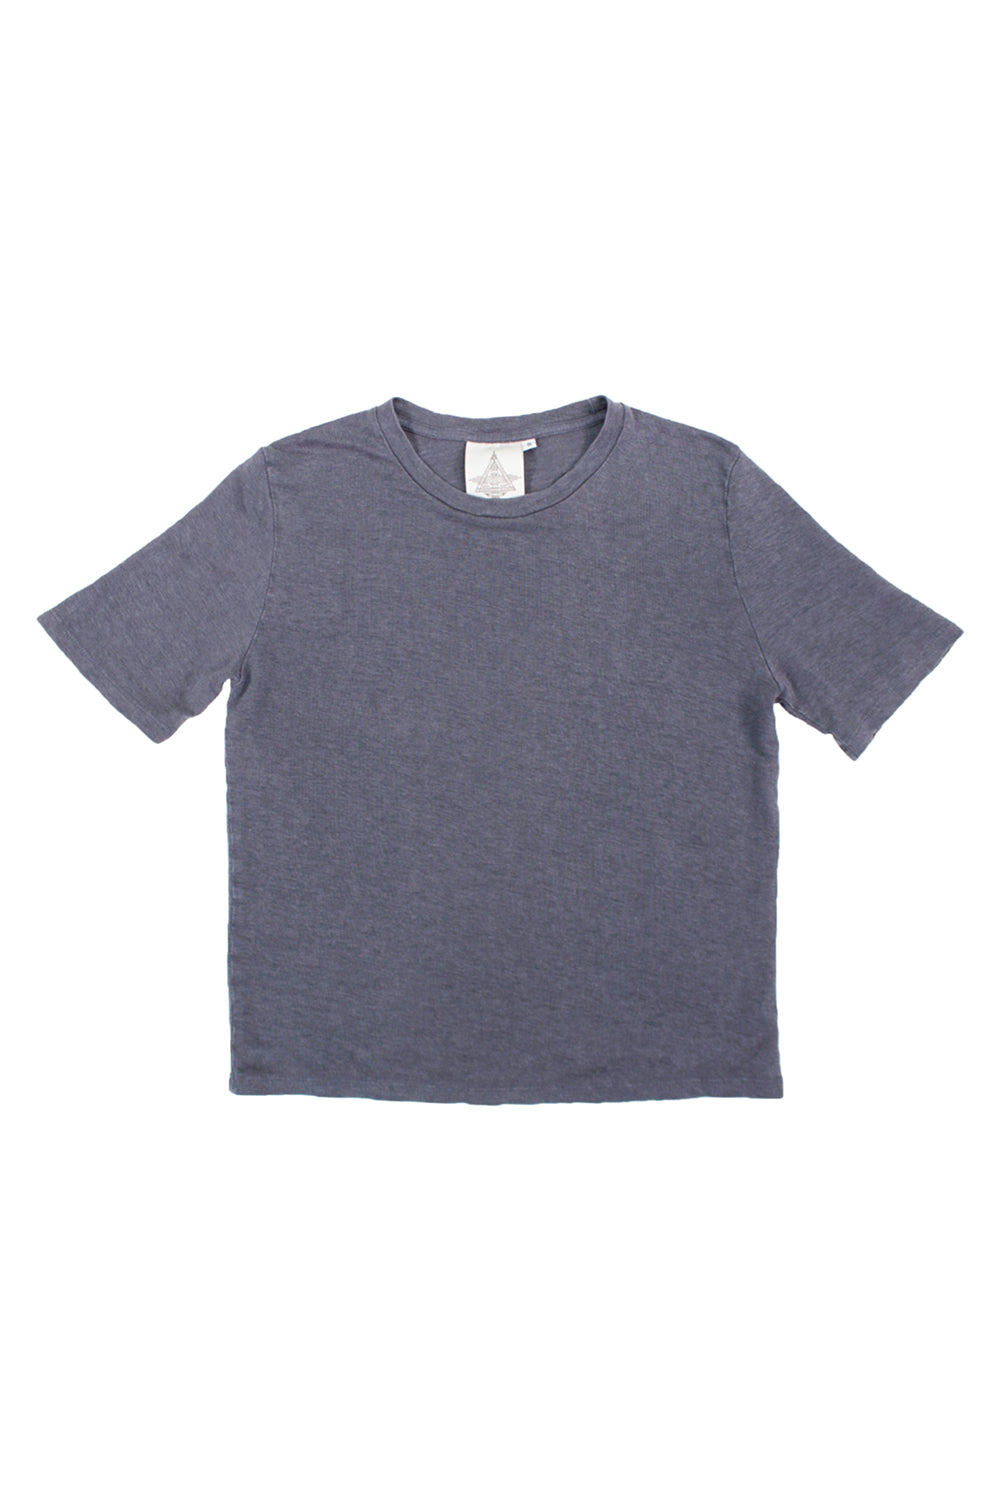 Dakota - 100% Hemp Cropped Tee | Jungmaven Hemp Clothing & Accessories / Color: Diesel Gray